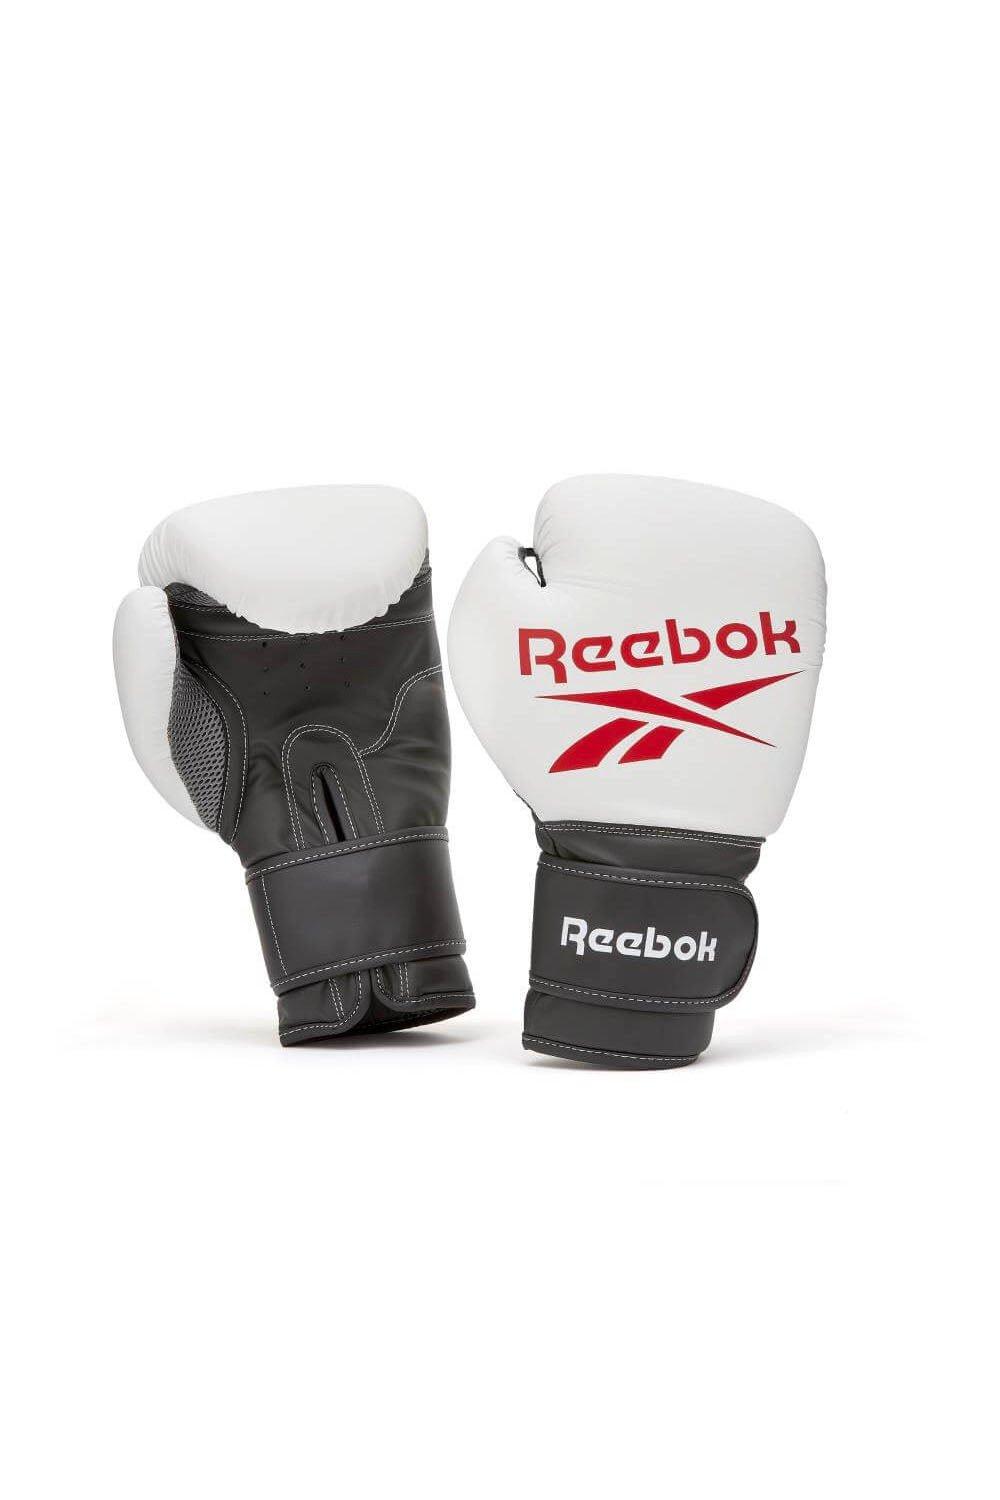 Reebok Boxing Gloves - Red/White|Size: 16oz